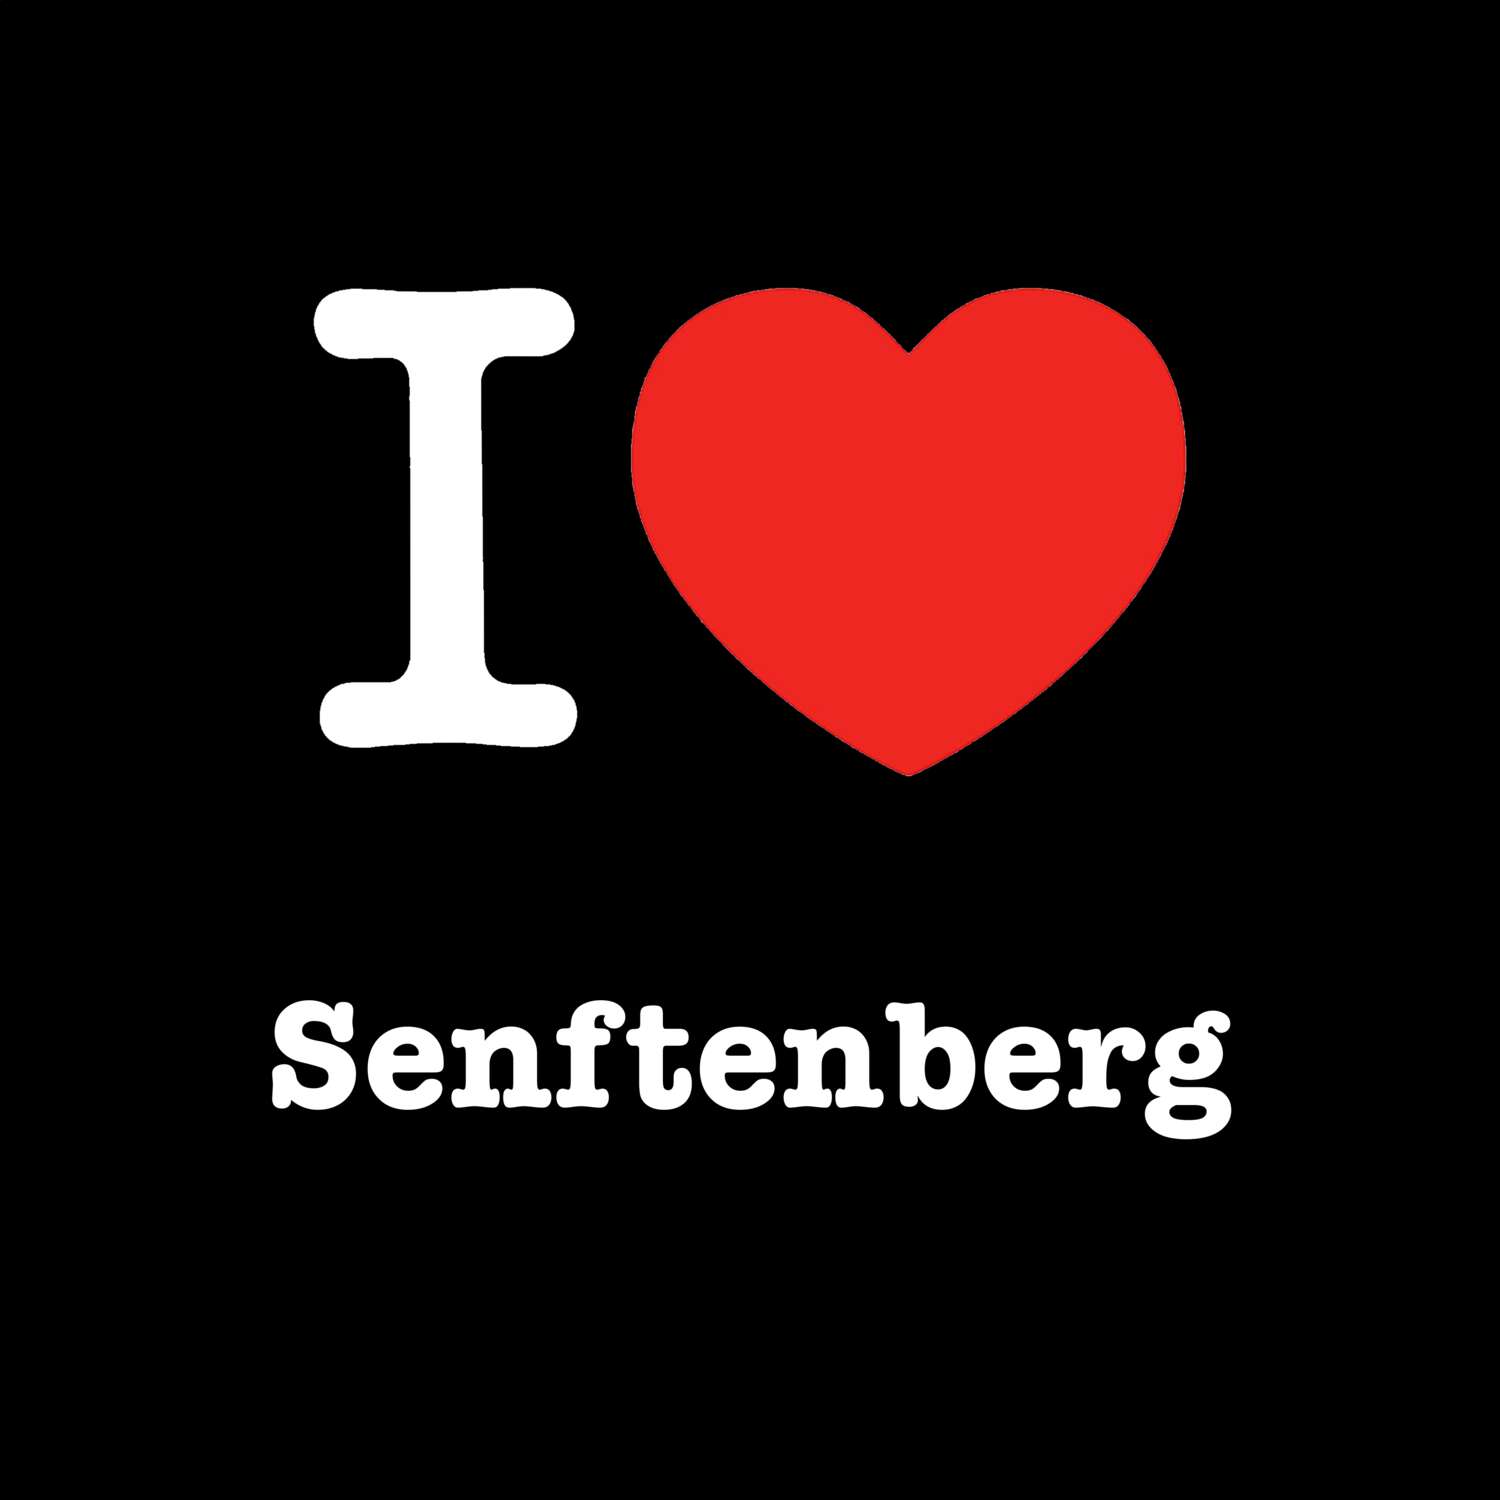 Senftenberg T-Shirt »I love«